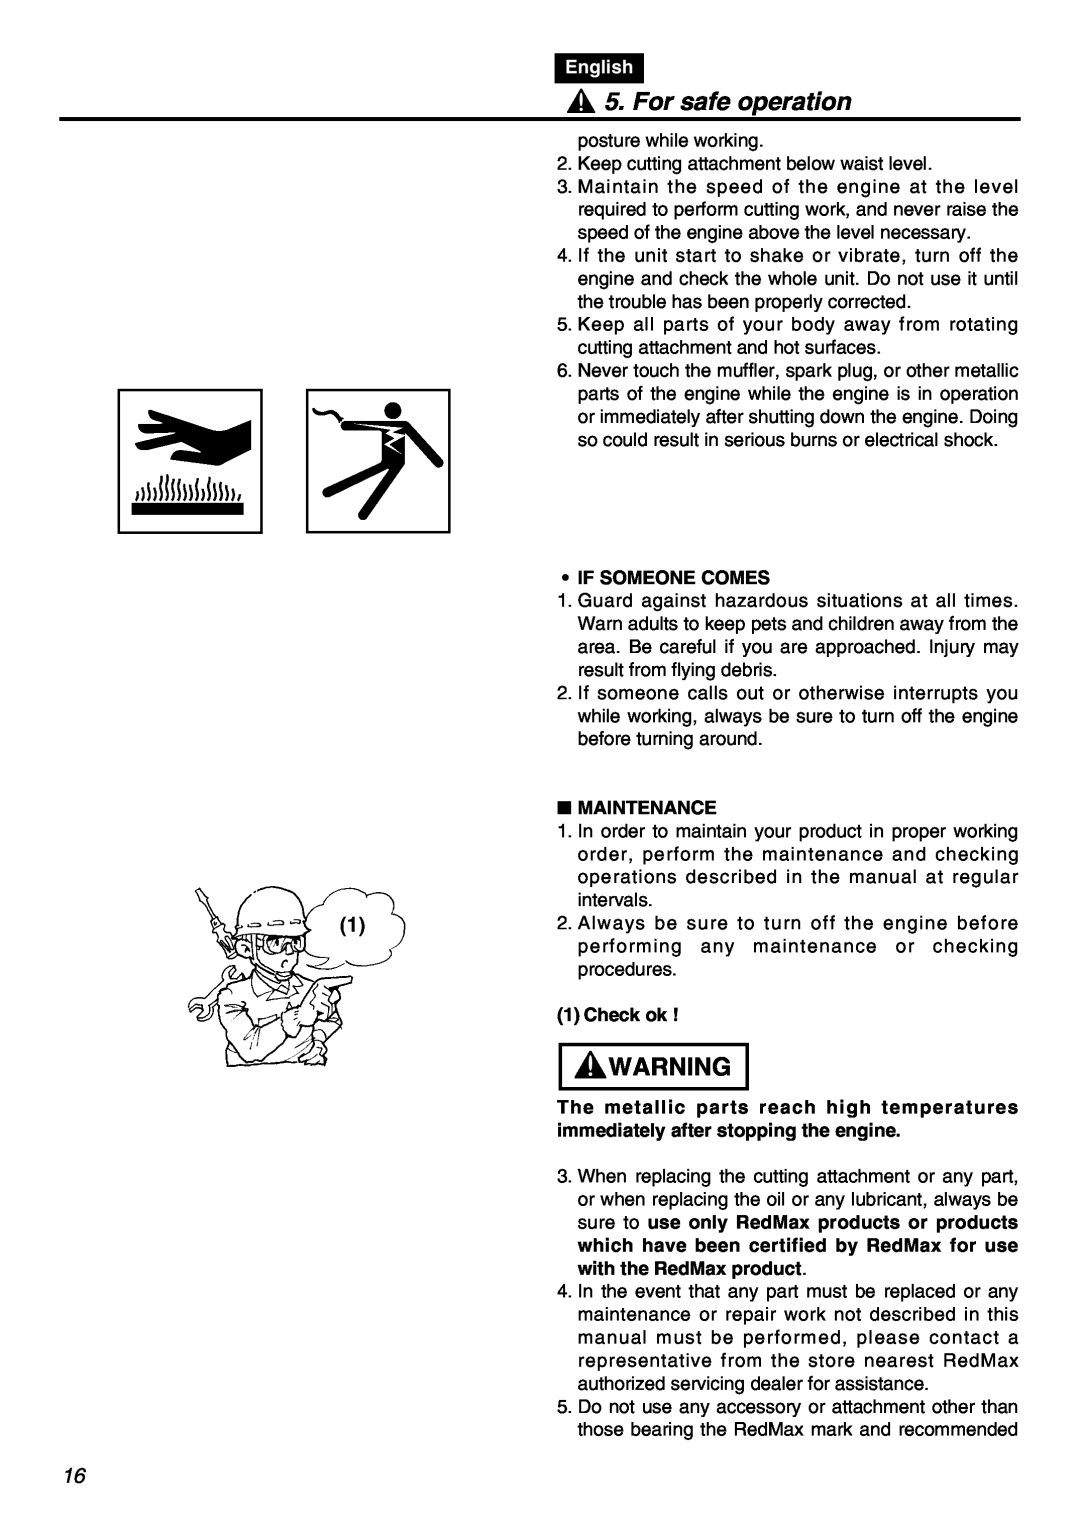 Univex SRTZ2401-CA manual For safe operation, English, If Someone Comes, Maintenance, Check ok 